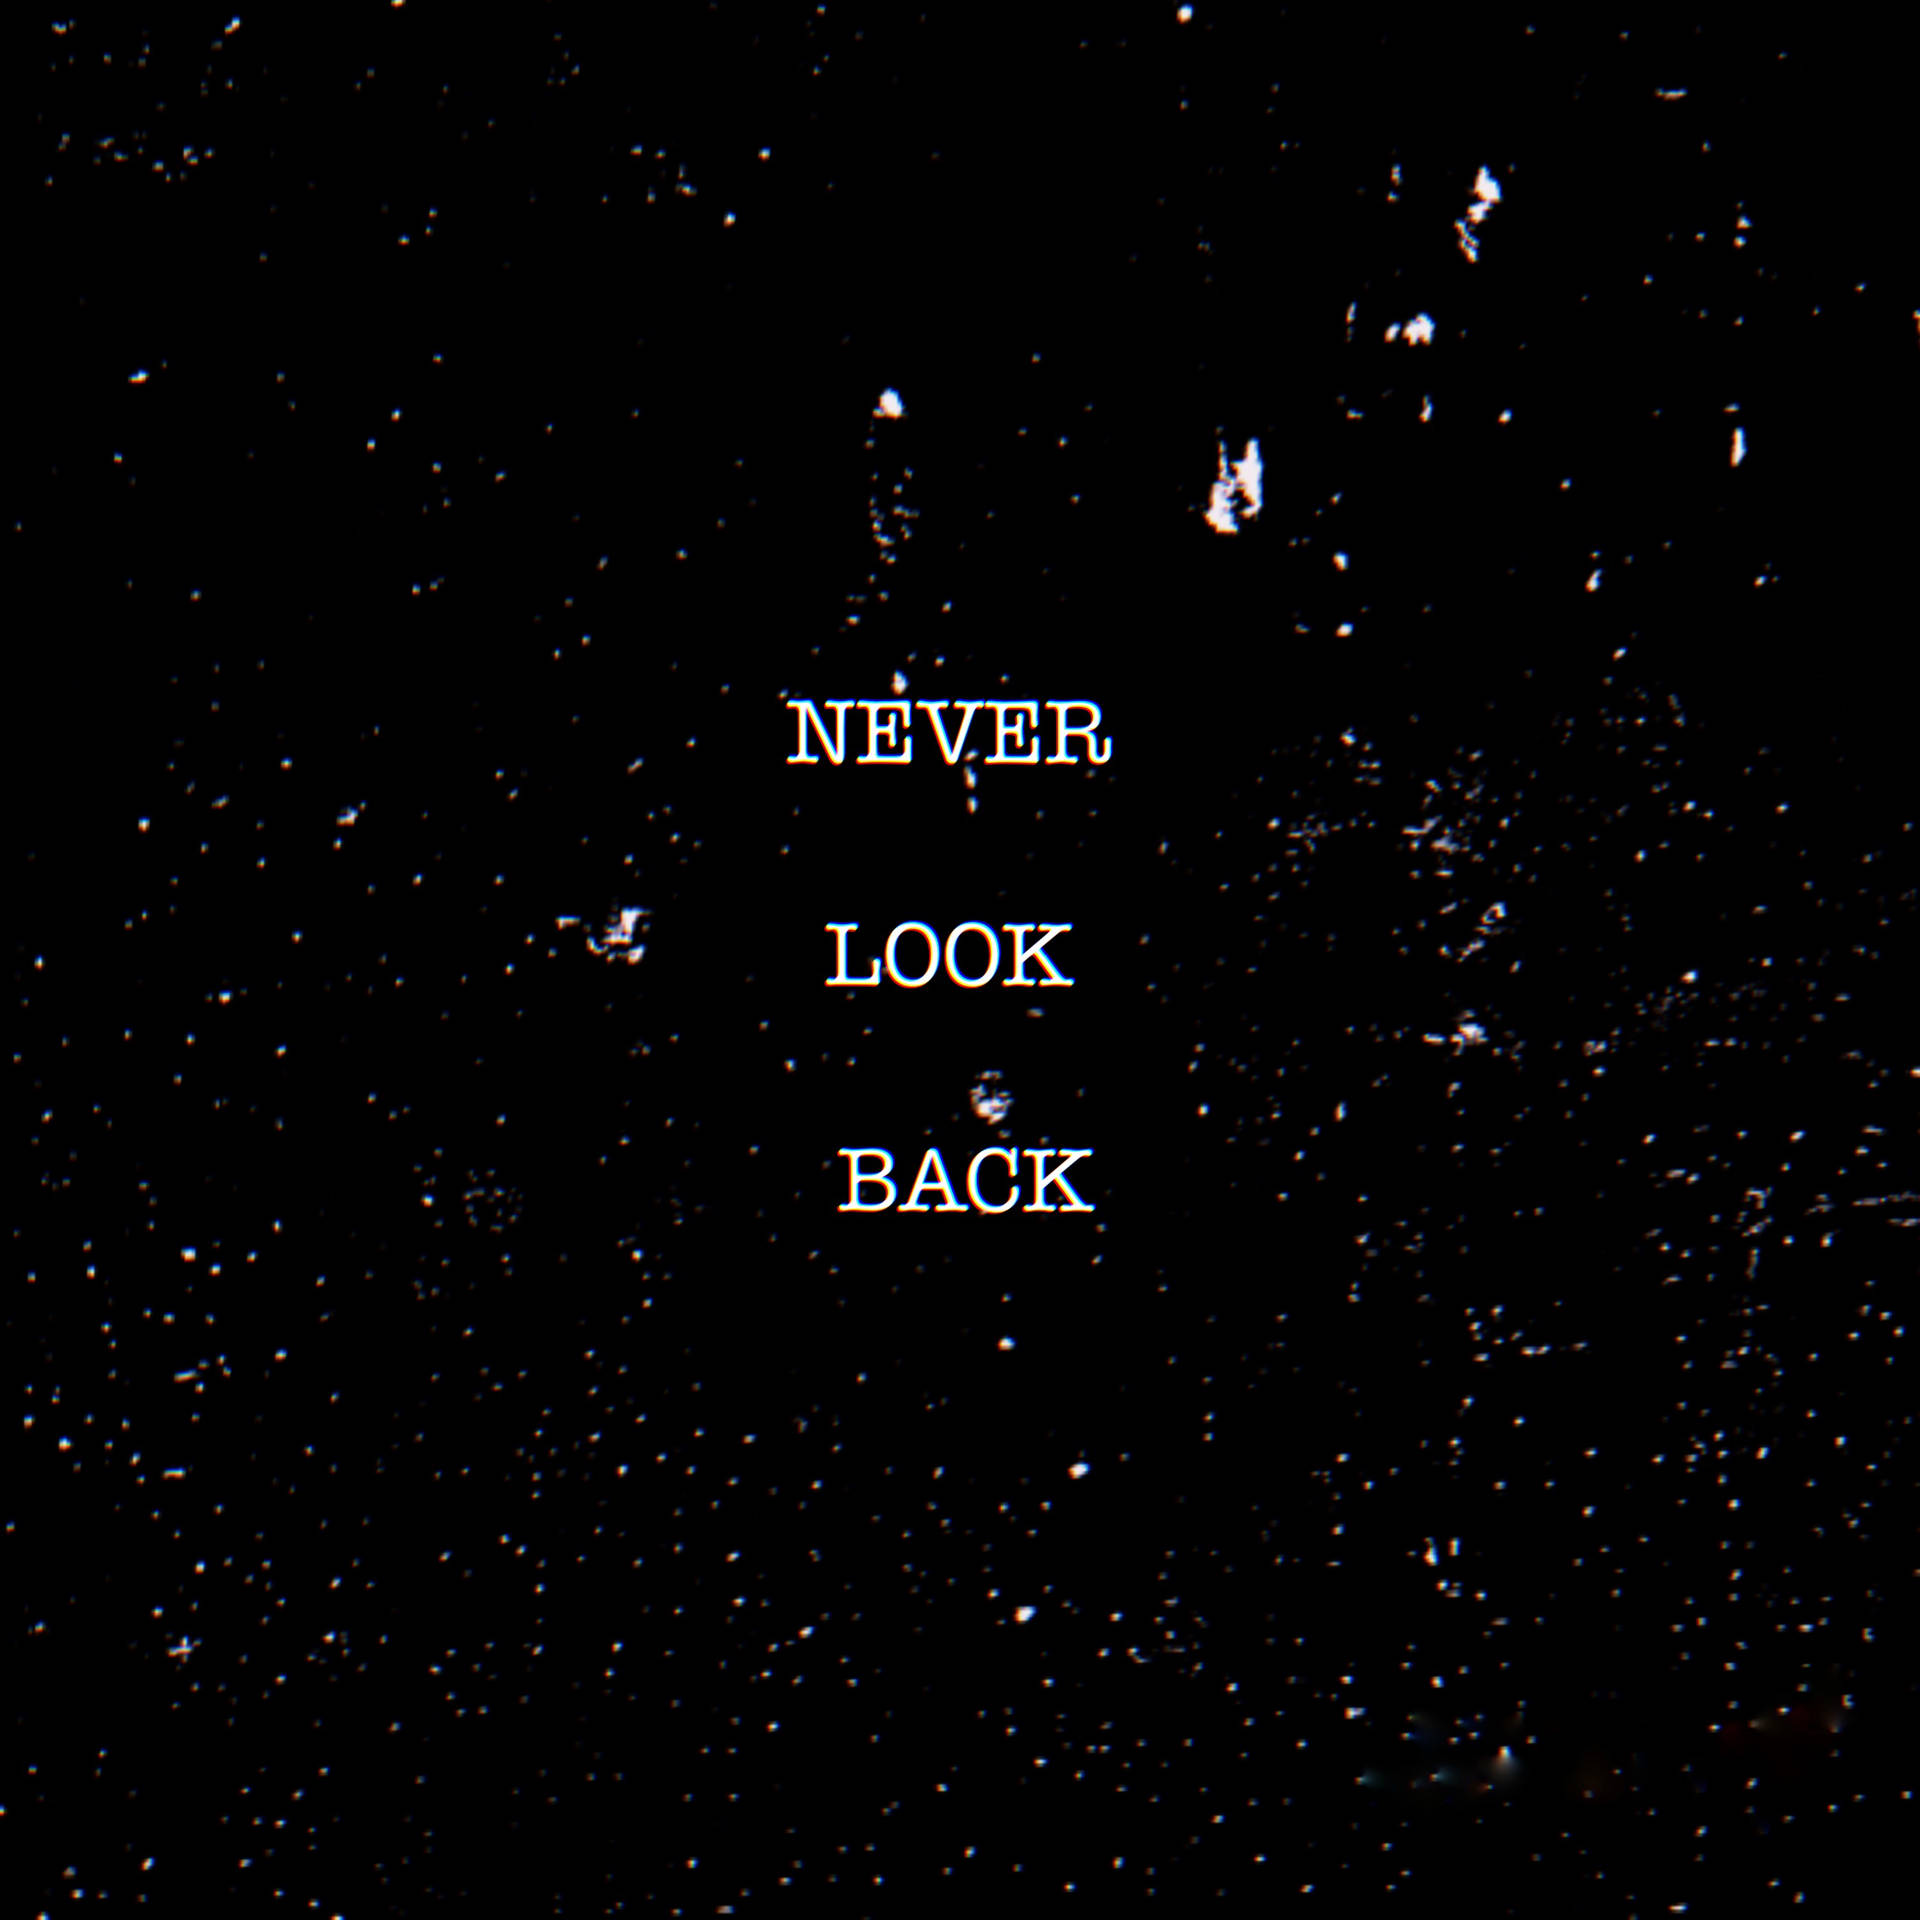 Inspirational Never Look Back